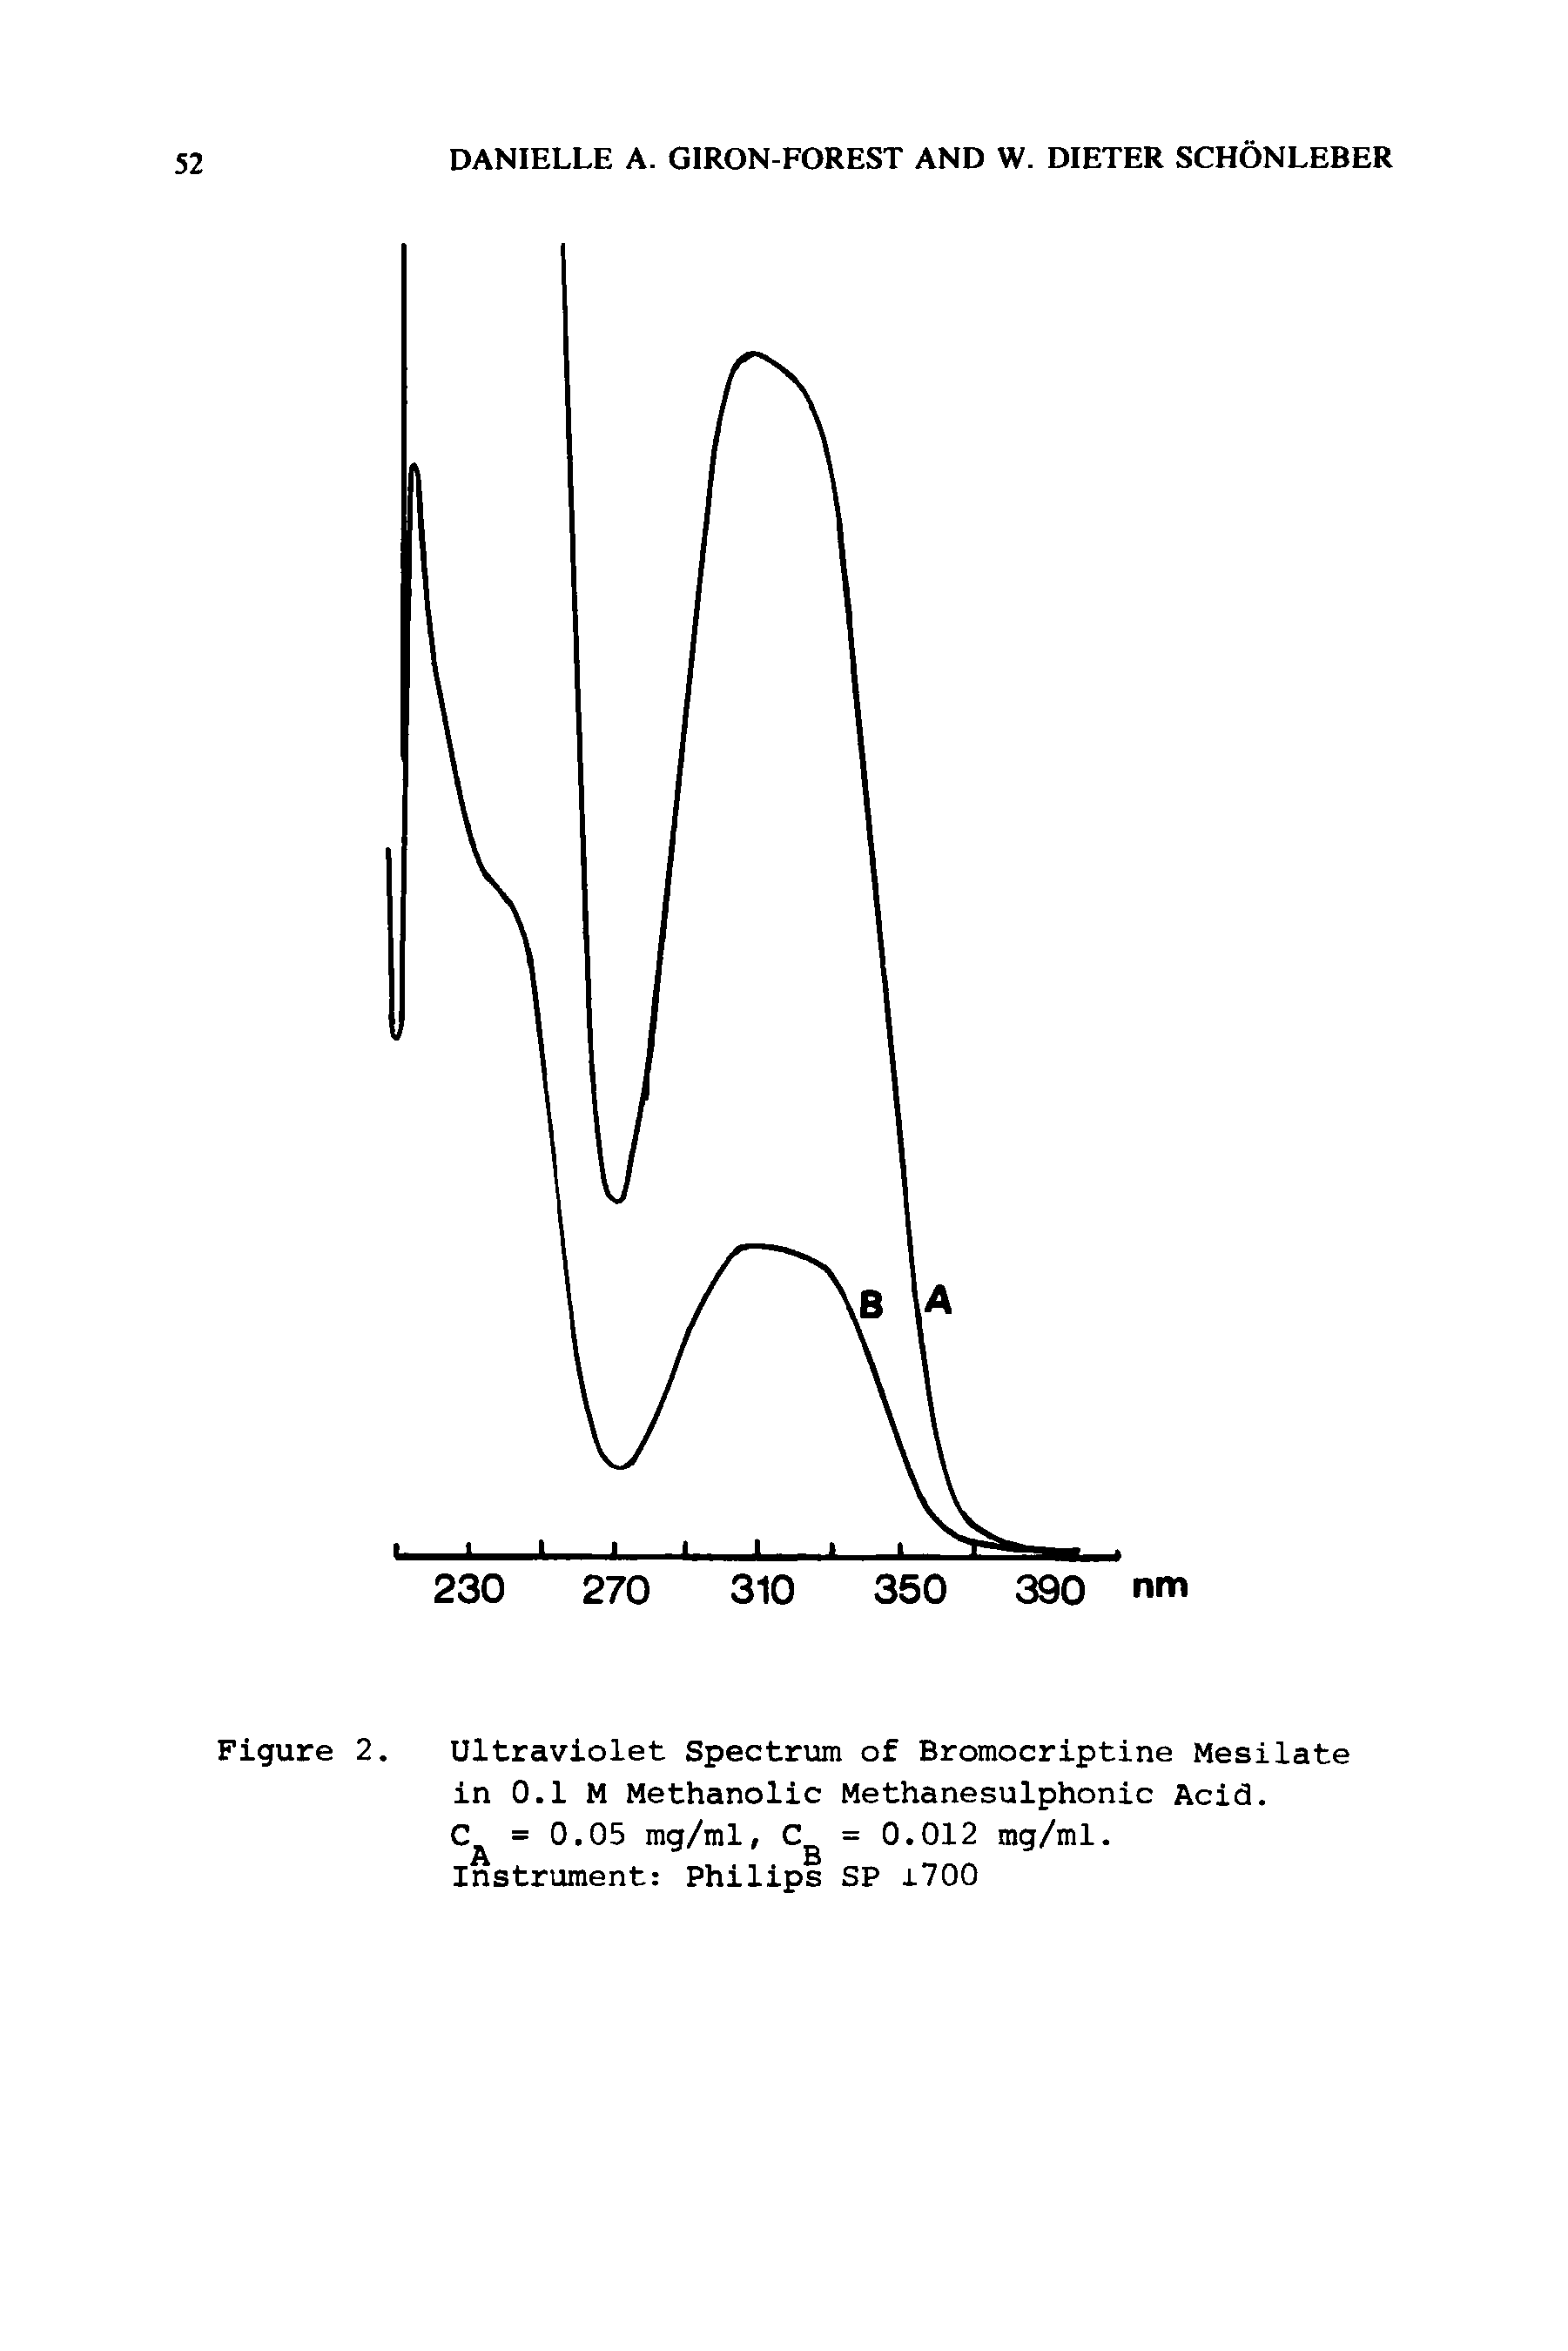 Figure 2. Ultraviolet Spectrum of Bromocriptine Mesilate in 0.1 M Methanolic Methanesulphonic Acid.